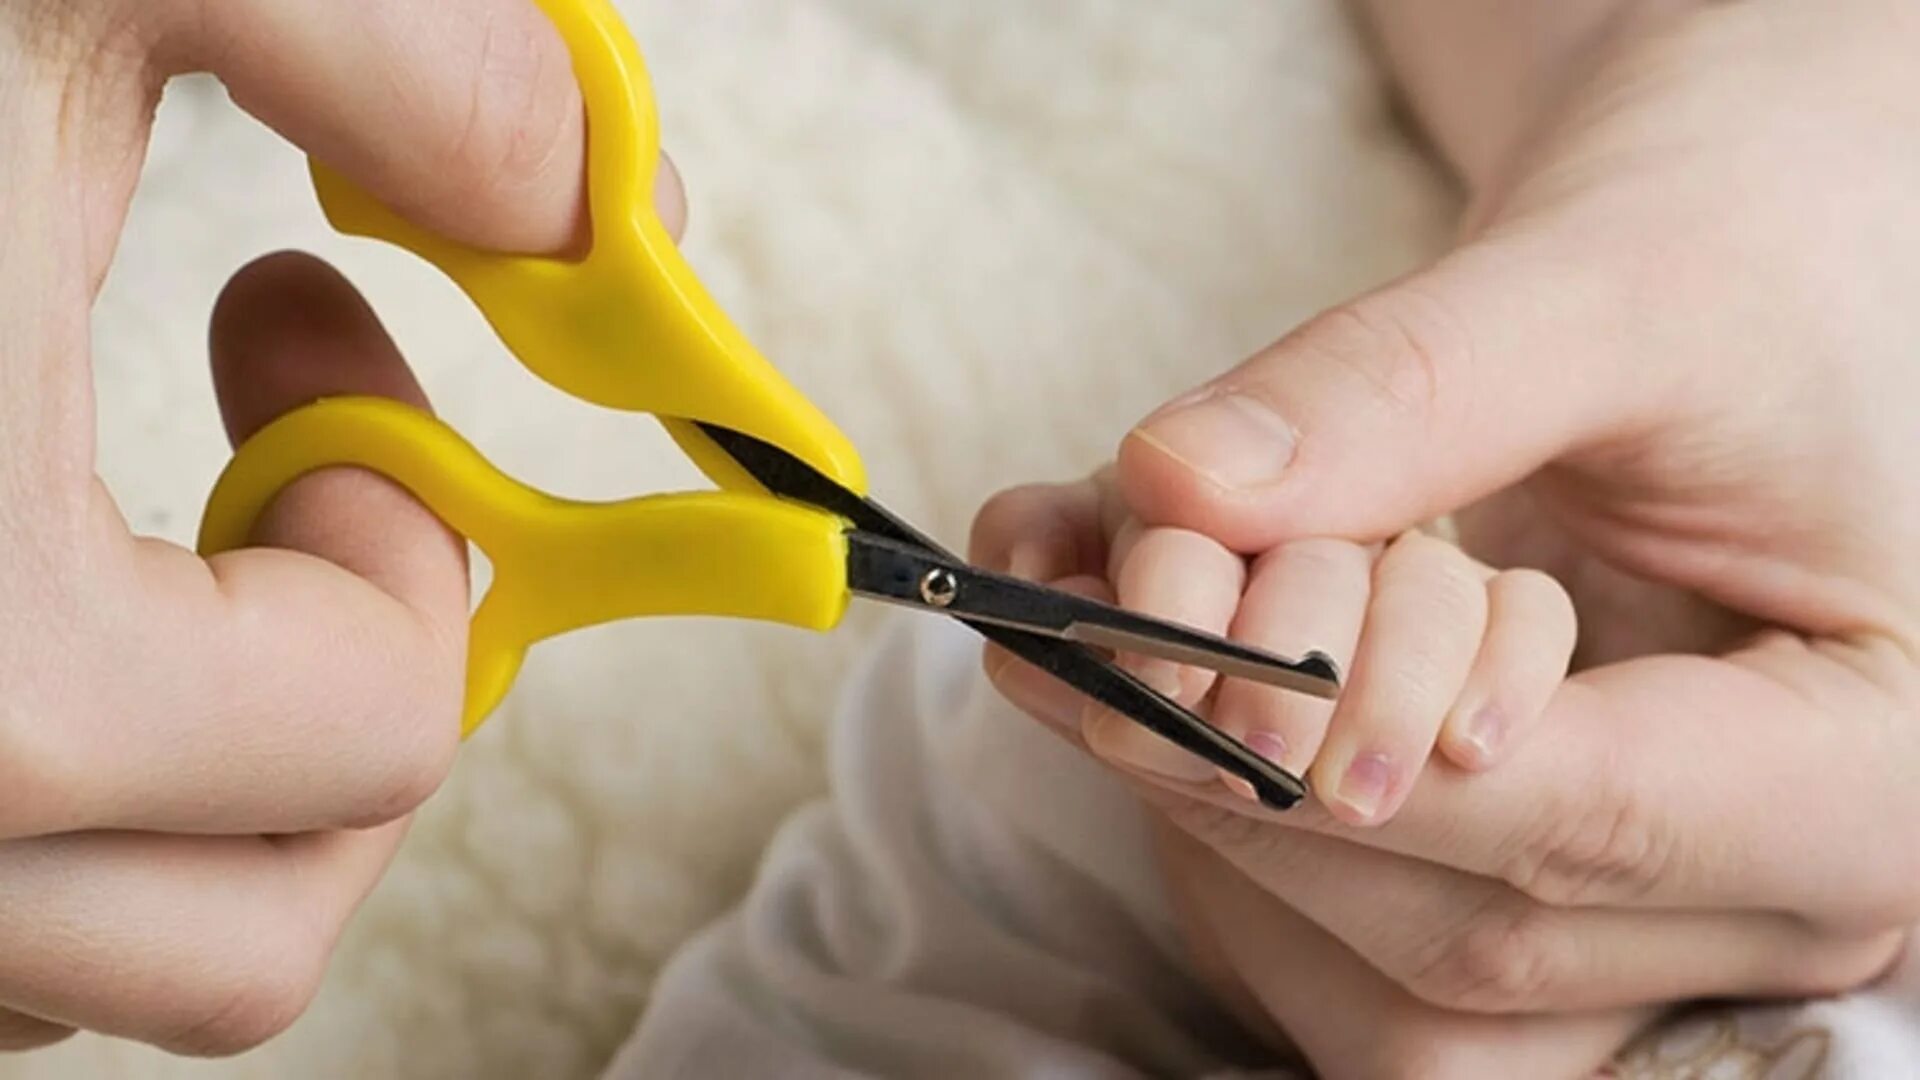 Подстричь ногти старому. Стричь ногти ребенку. Стрижка ногтей новорожденному. Ребенок подстригает ногти. Подстриженные ногти.